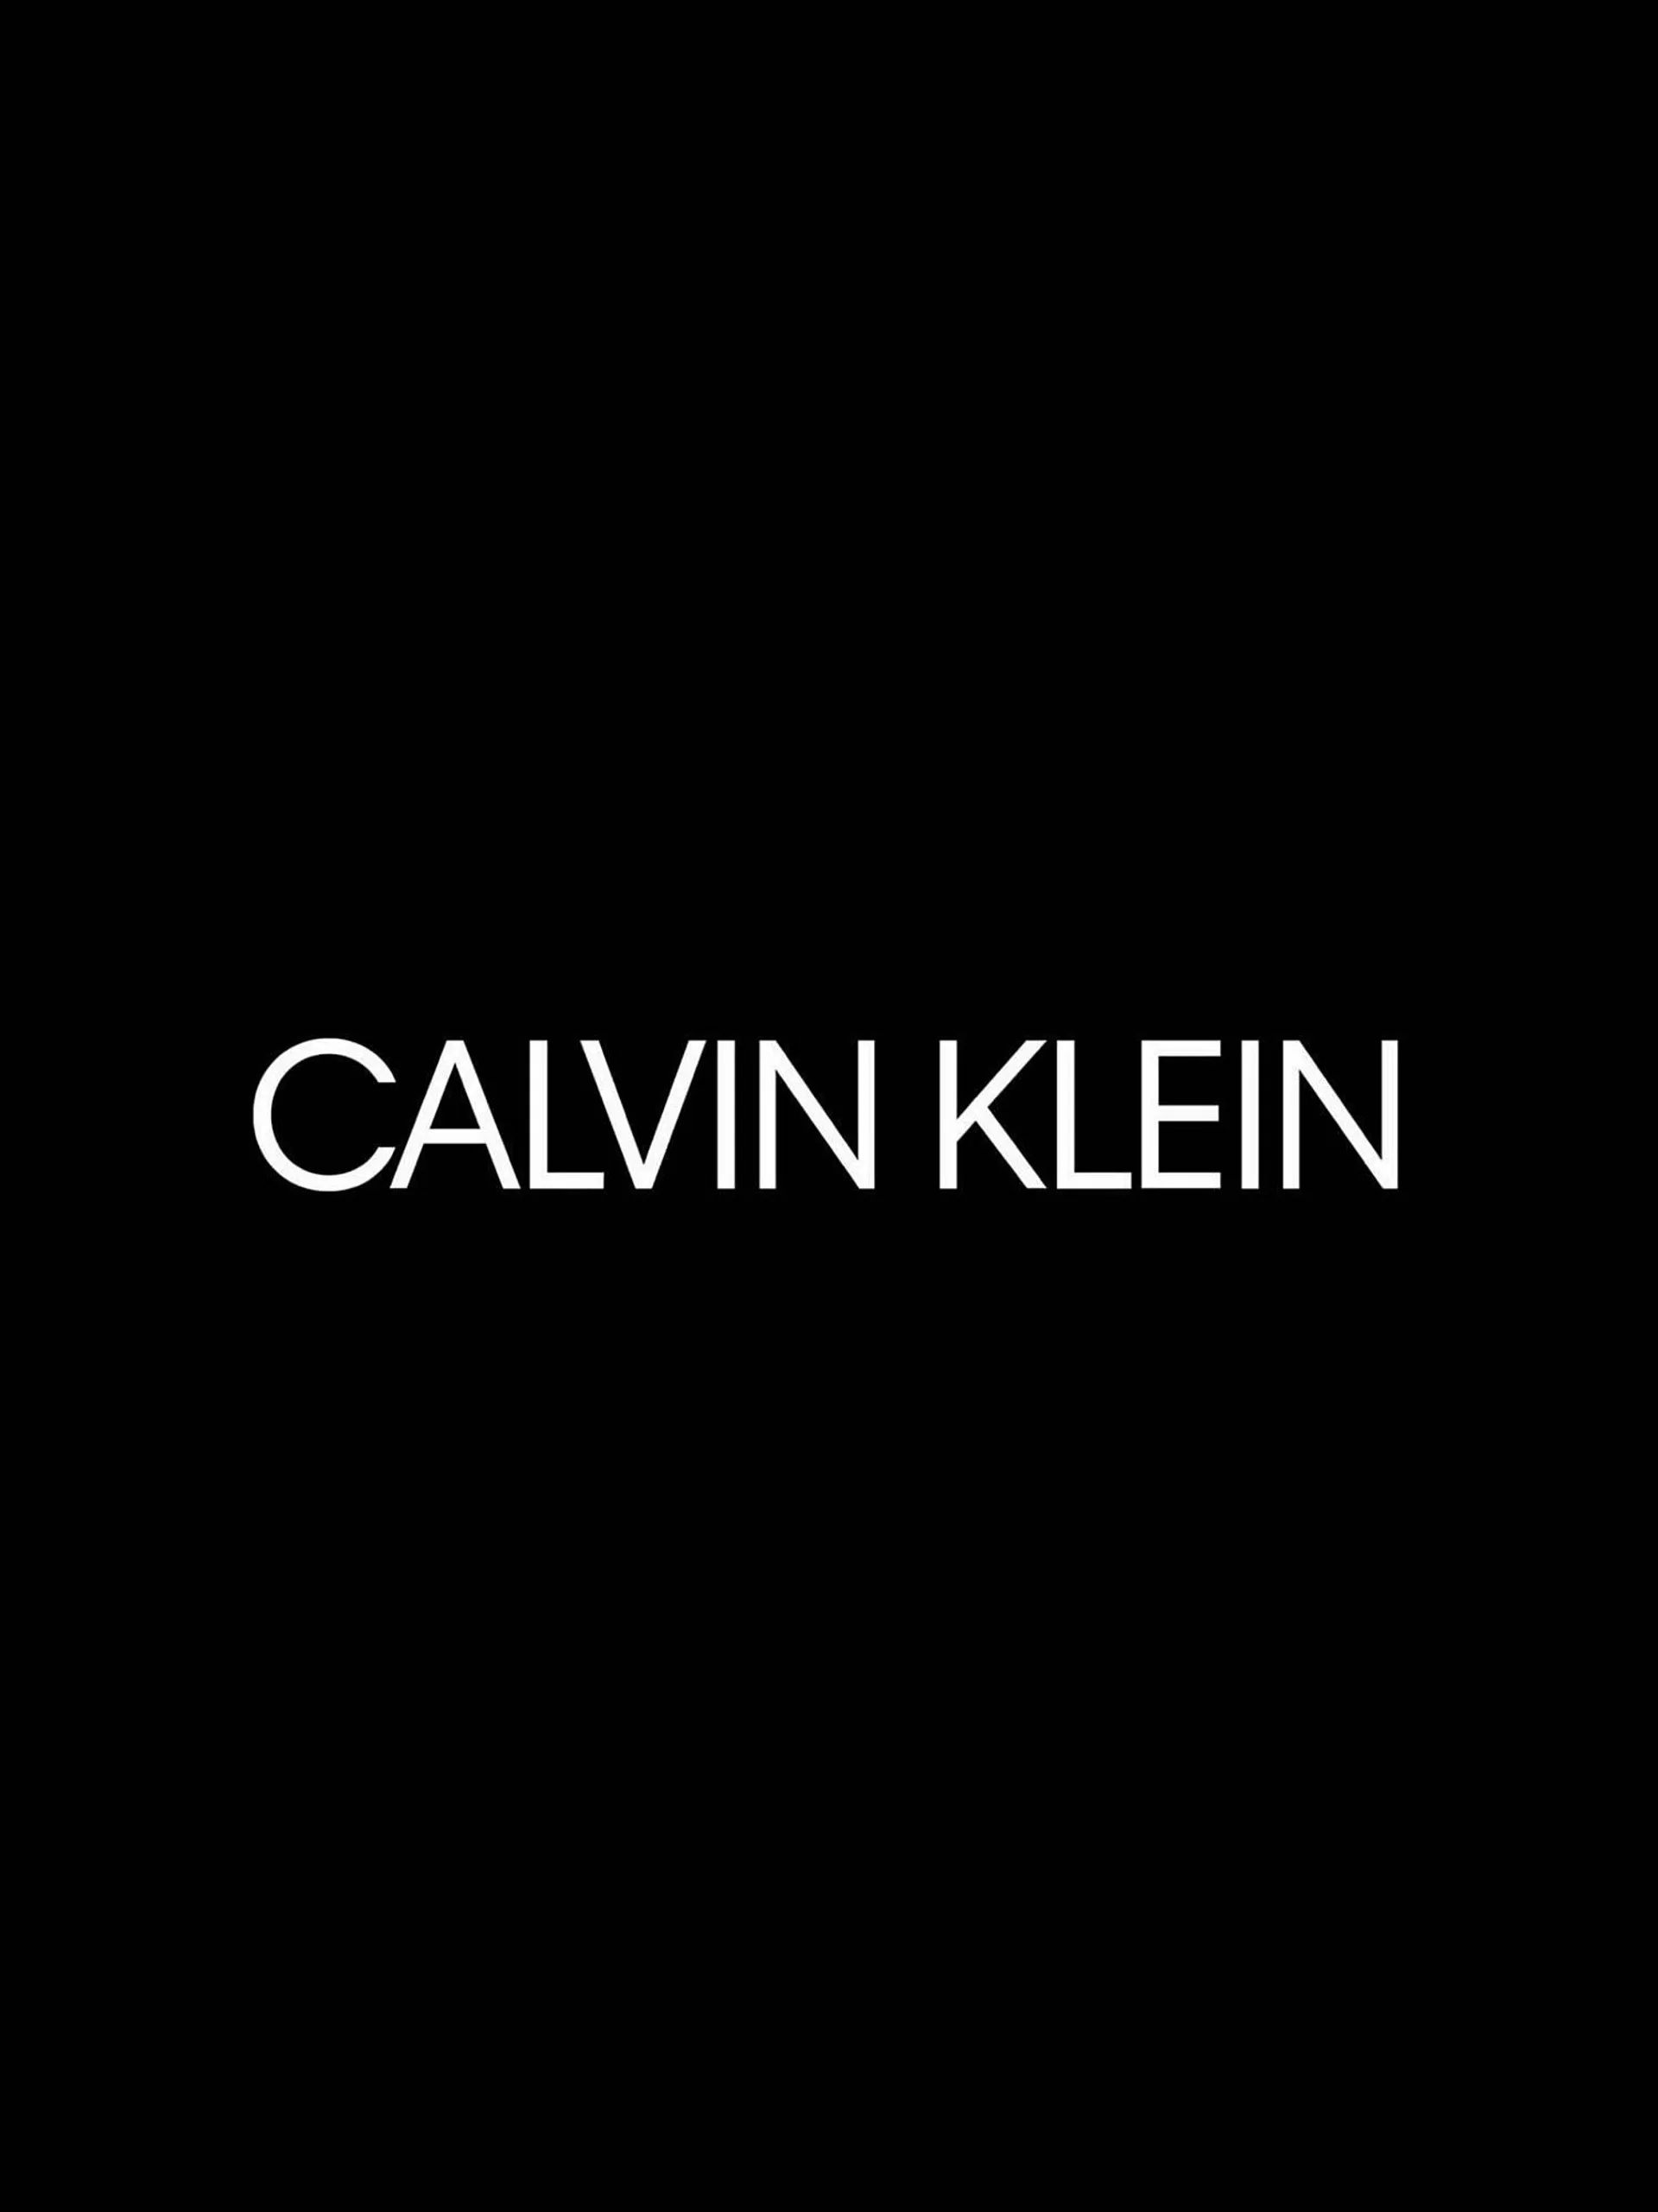 Calvin Klein folder - 12